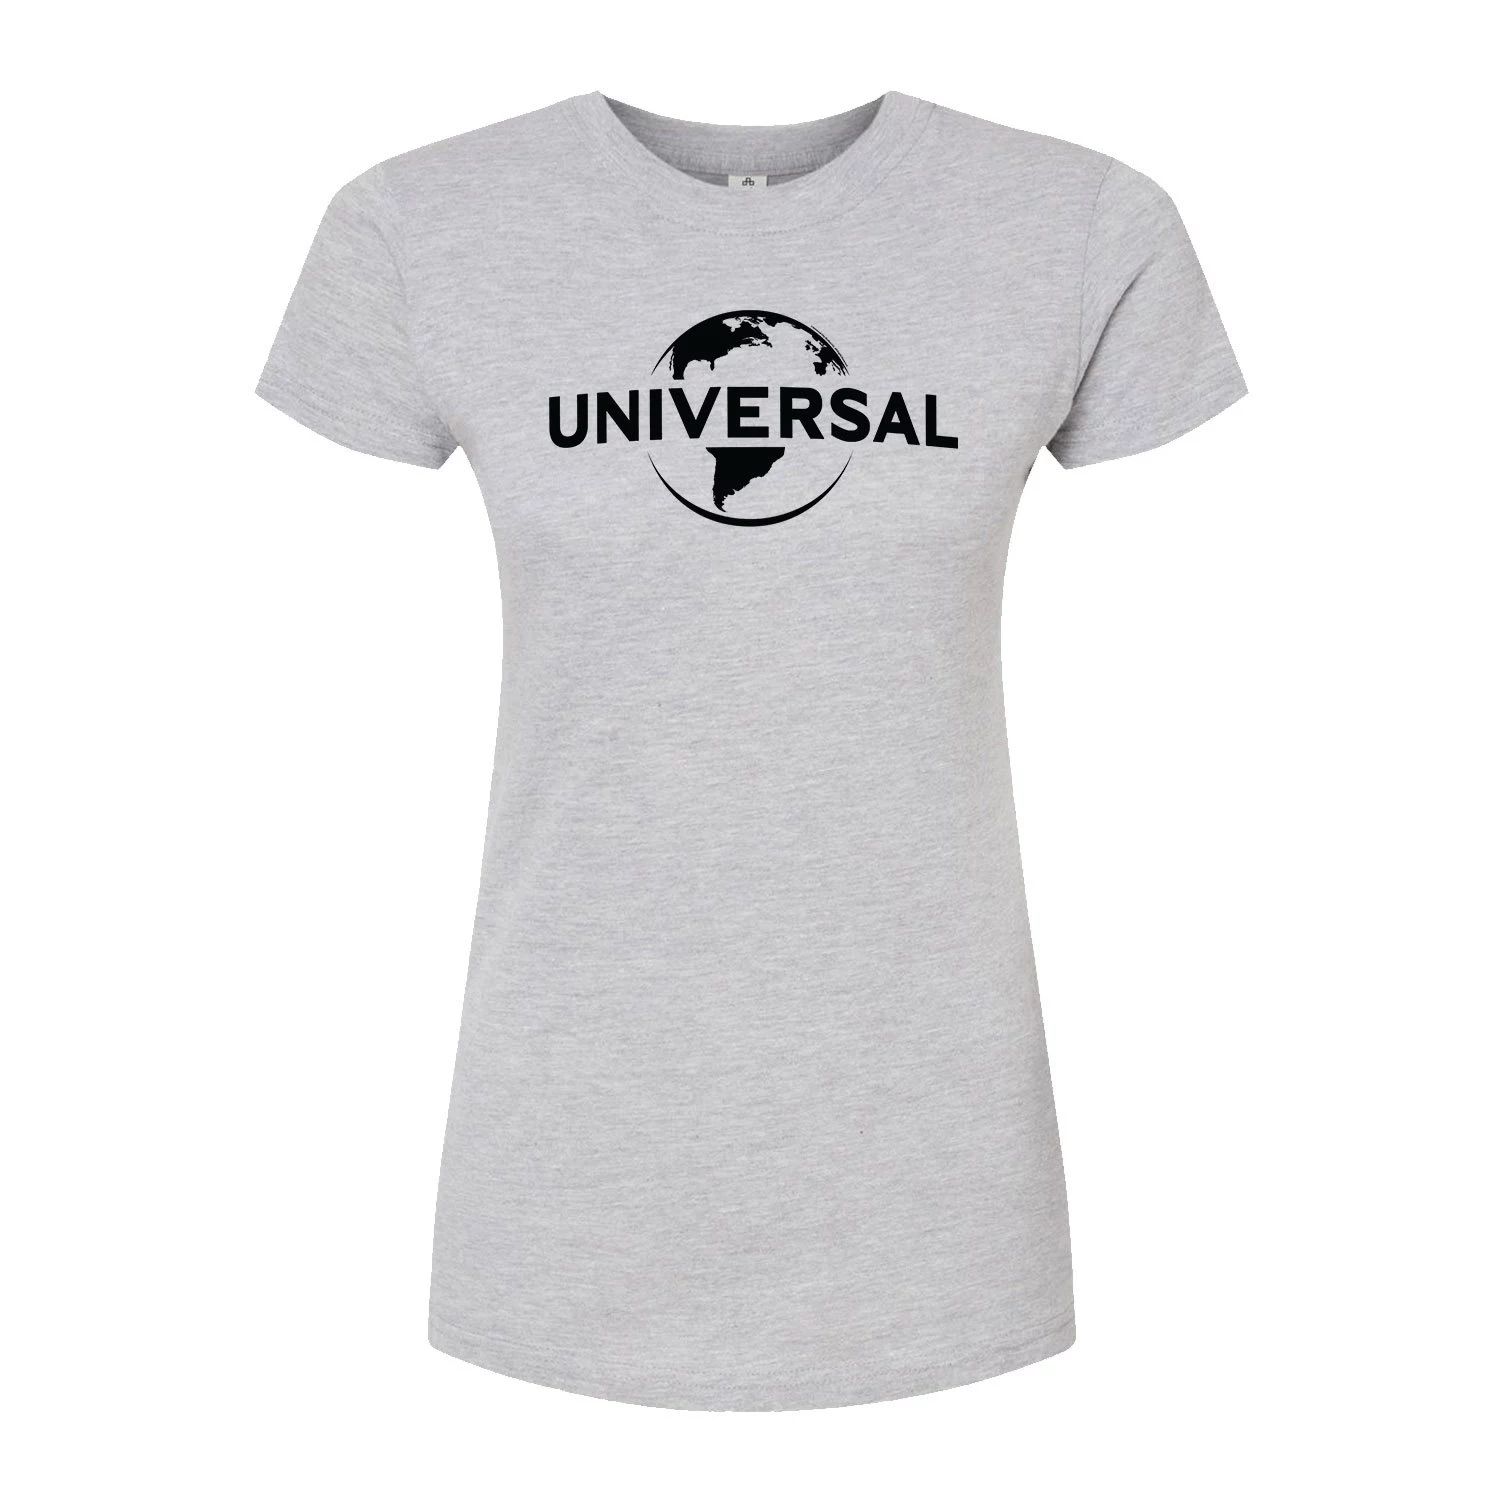 Юниорская футболка с логотипом Universal Licensed Character, серый